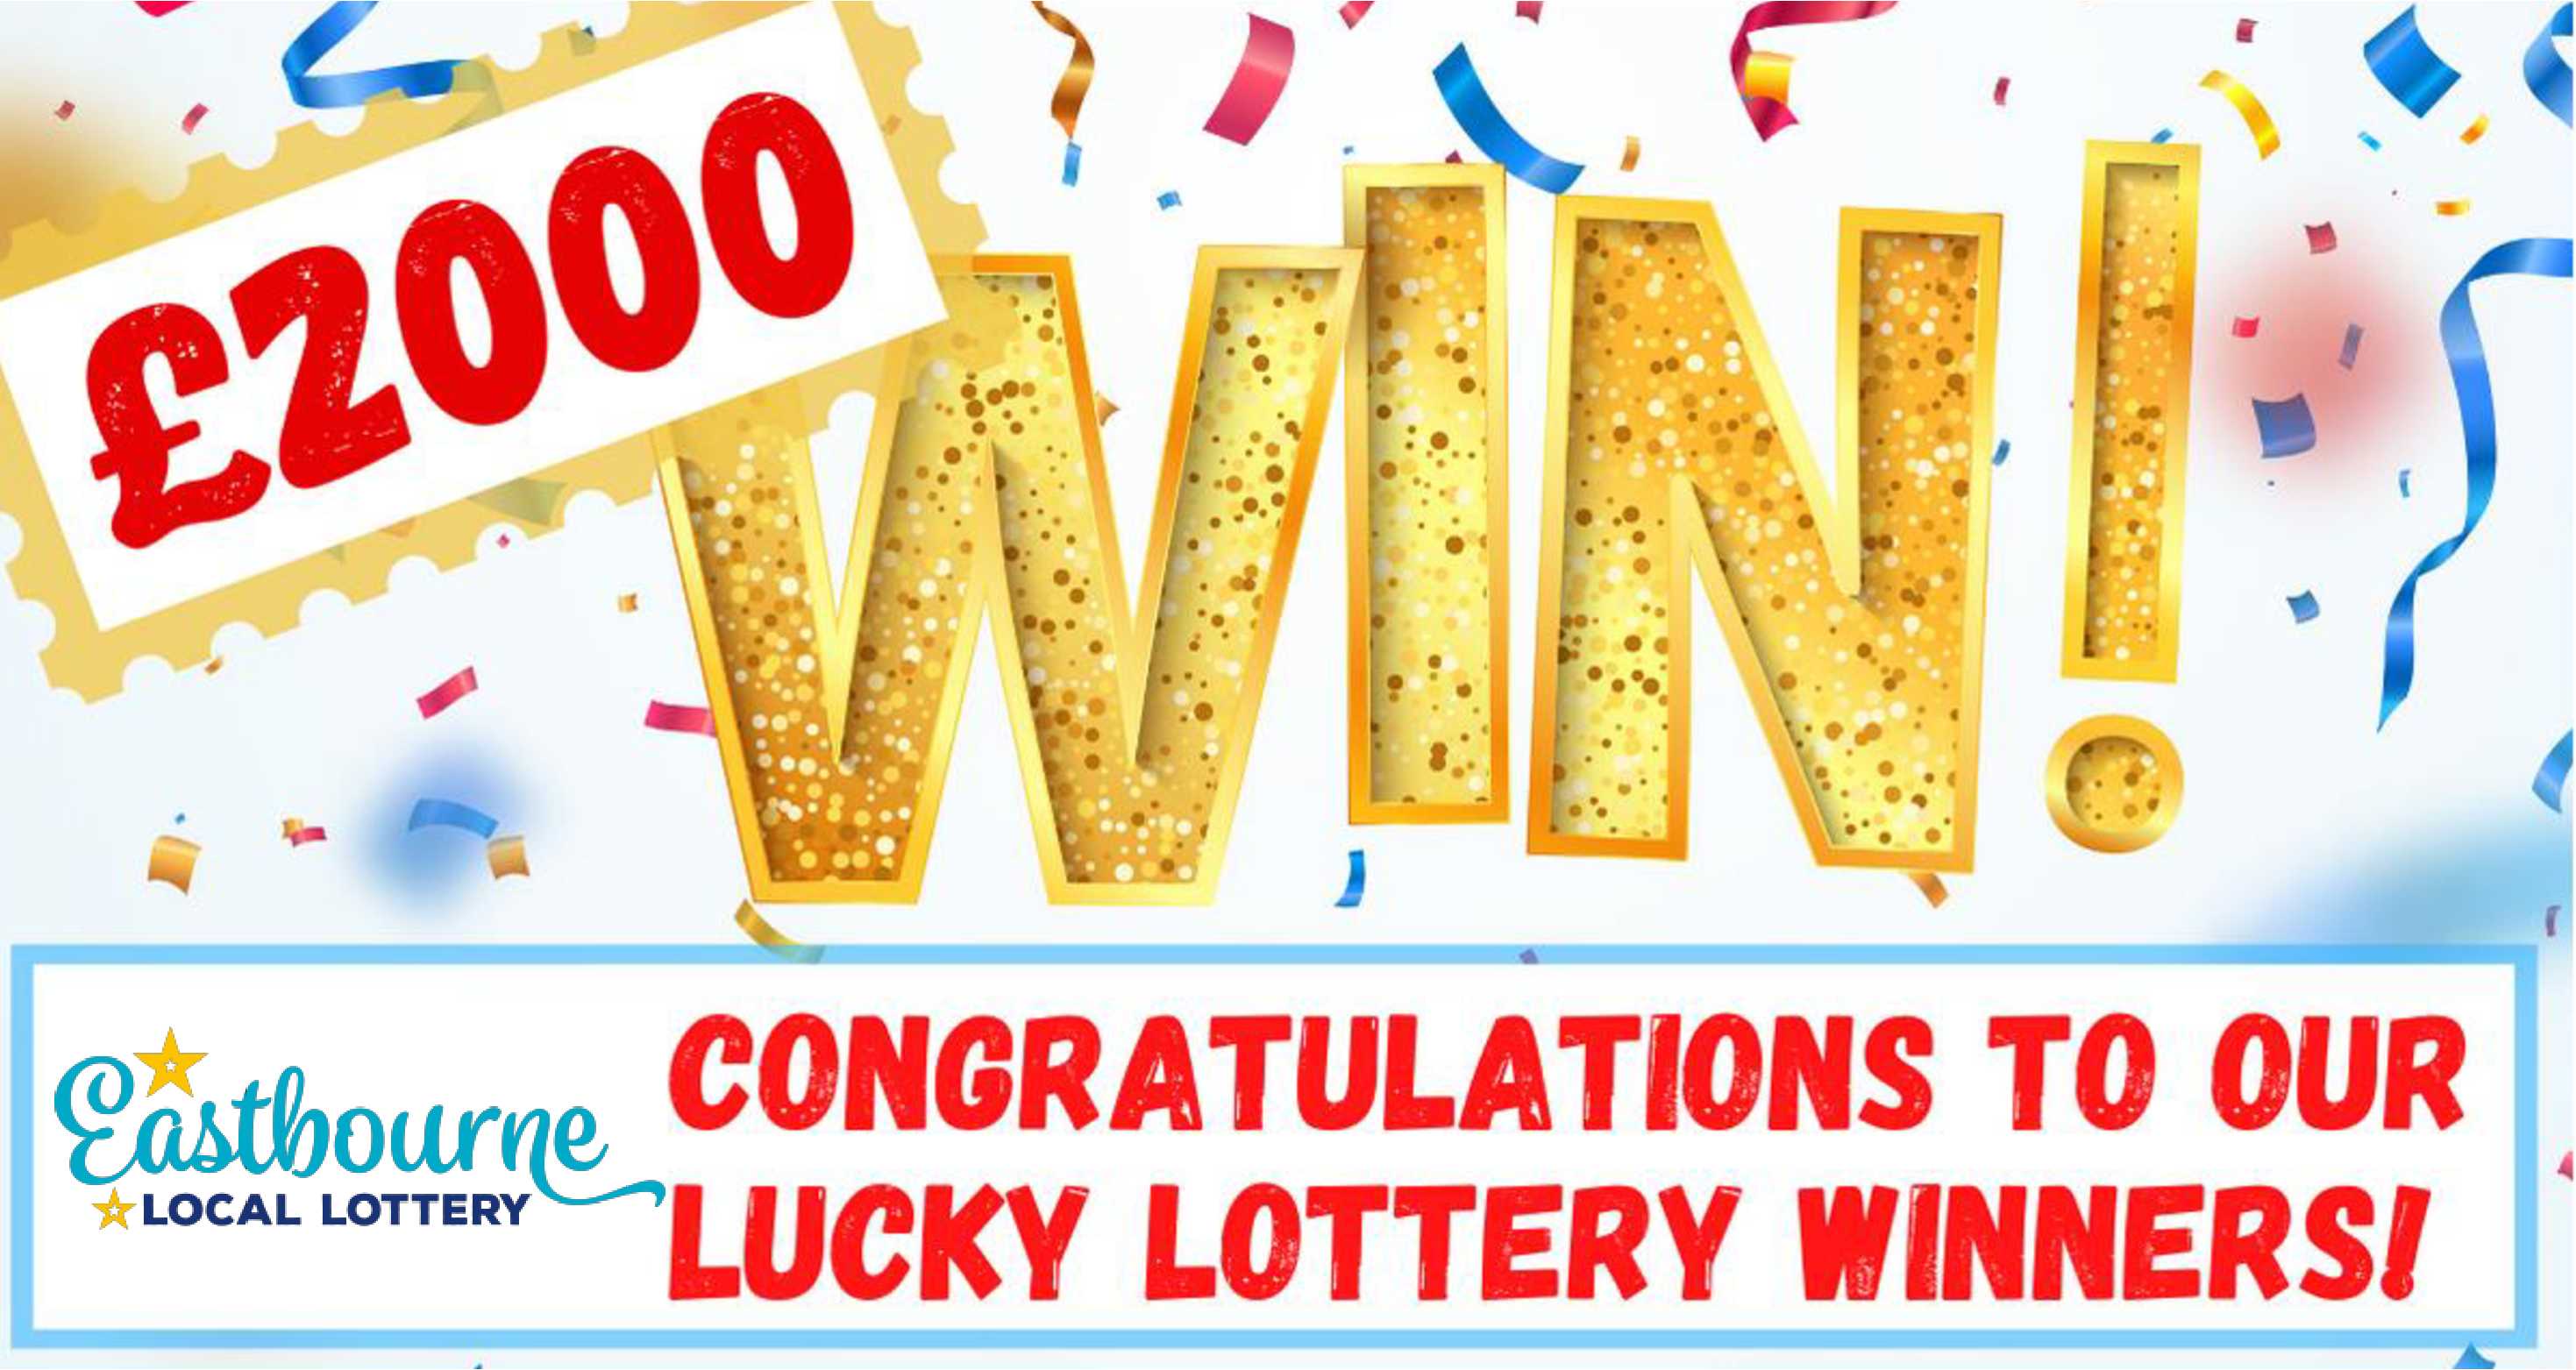 Local Lottery £2,000 winner!